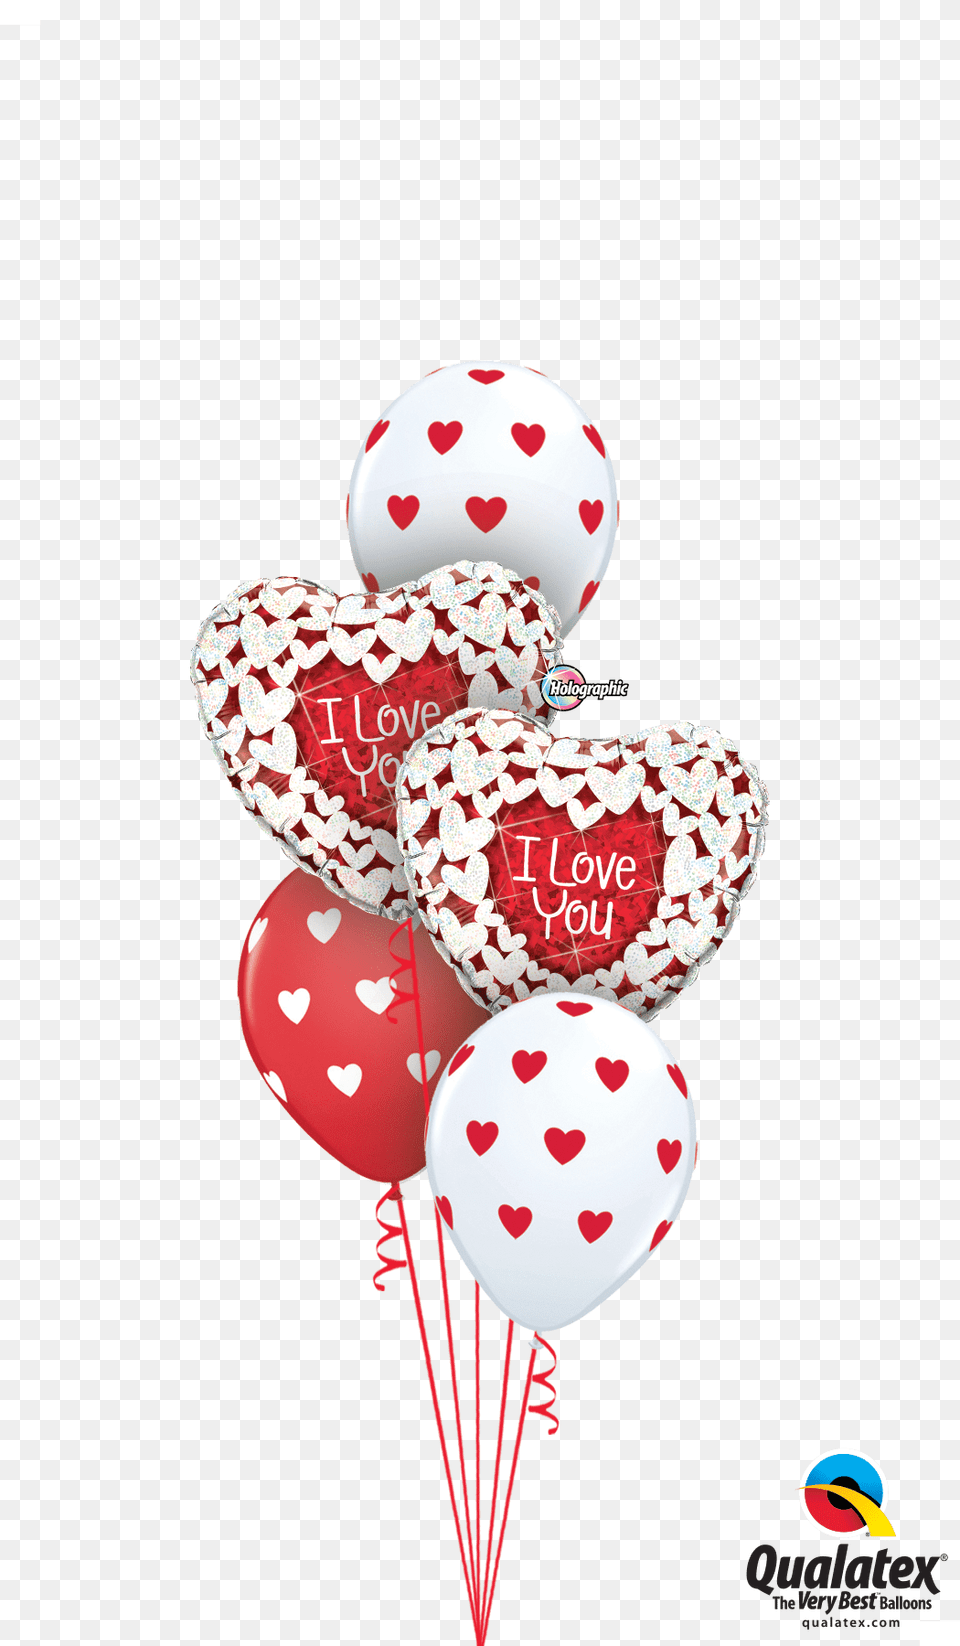 I Love You Glittering Hearts Balloon Bouquet Ljubavni Baloni Free Png Download